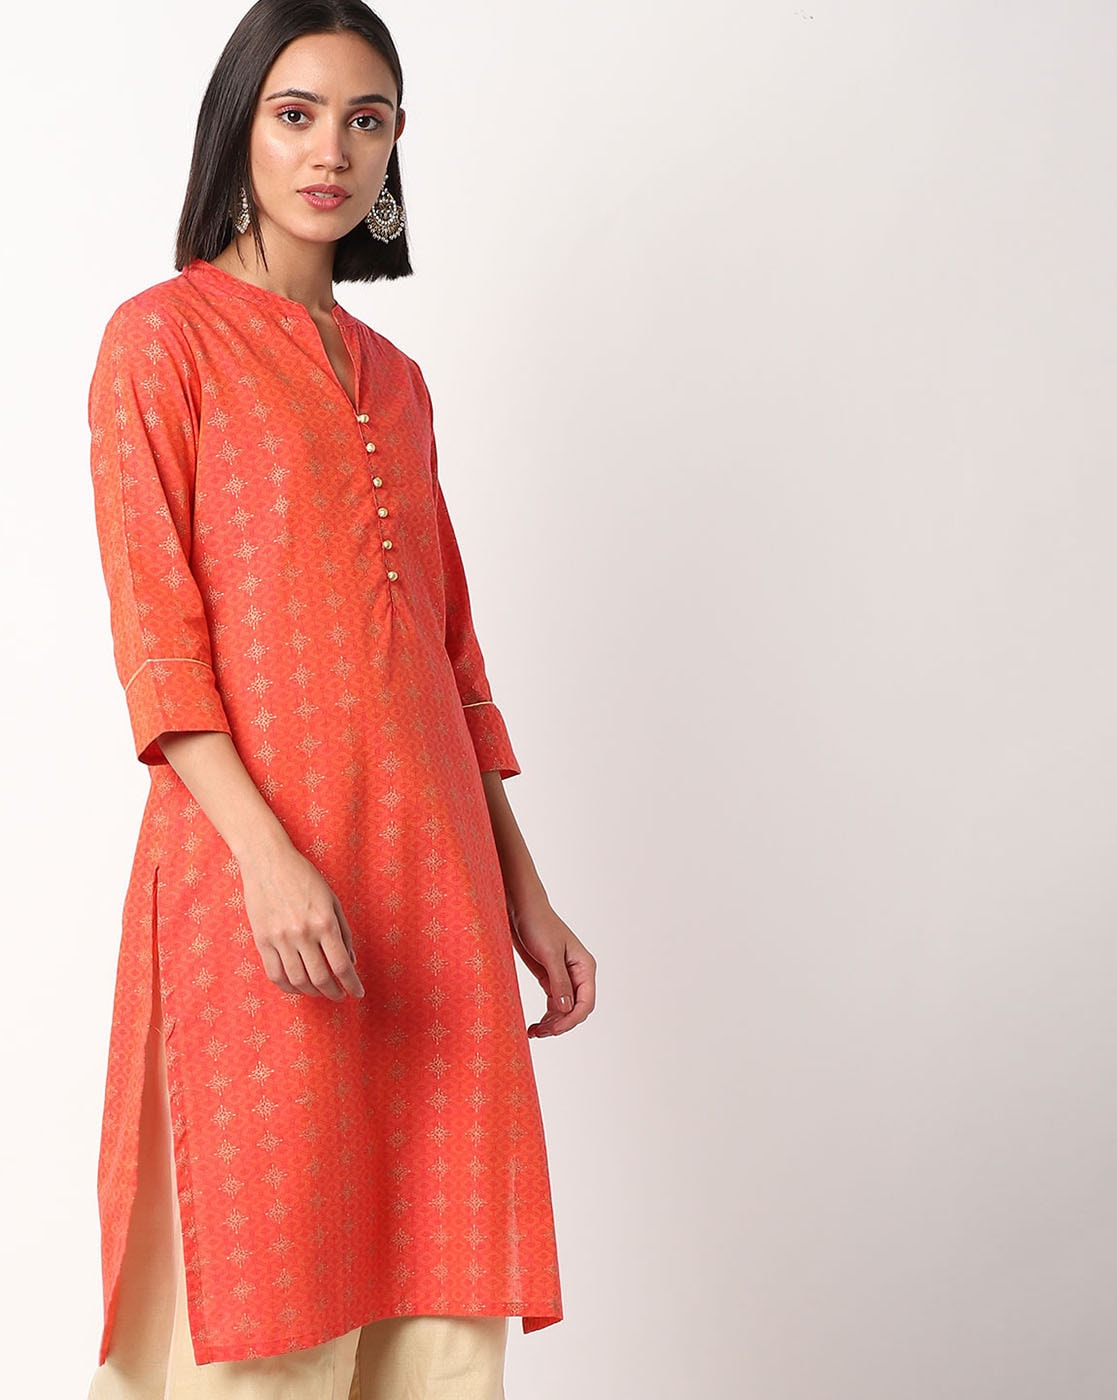 Top 12 Online Shopping Websites for Buying Indian Designer Kurtis |Ajio  Offers – Xuper